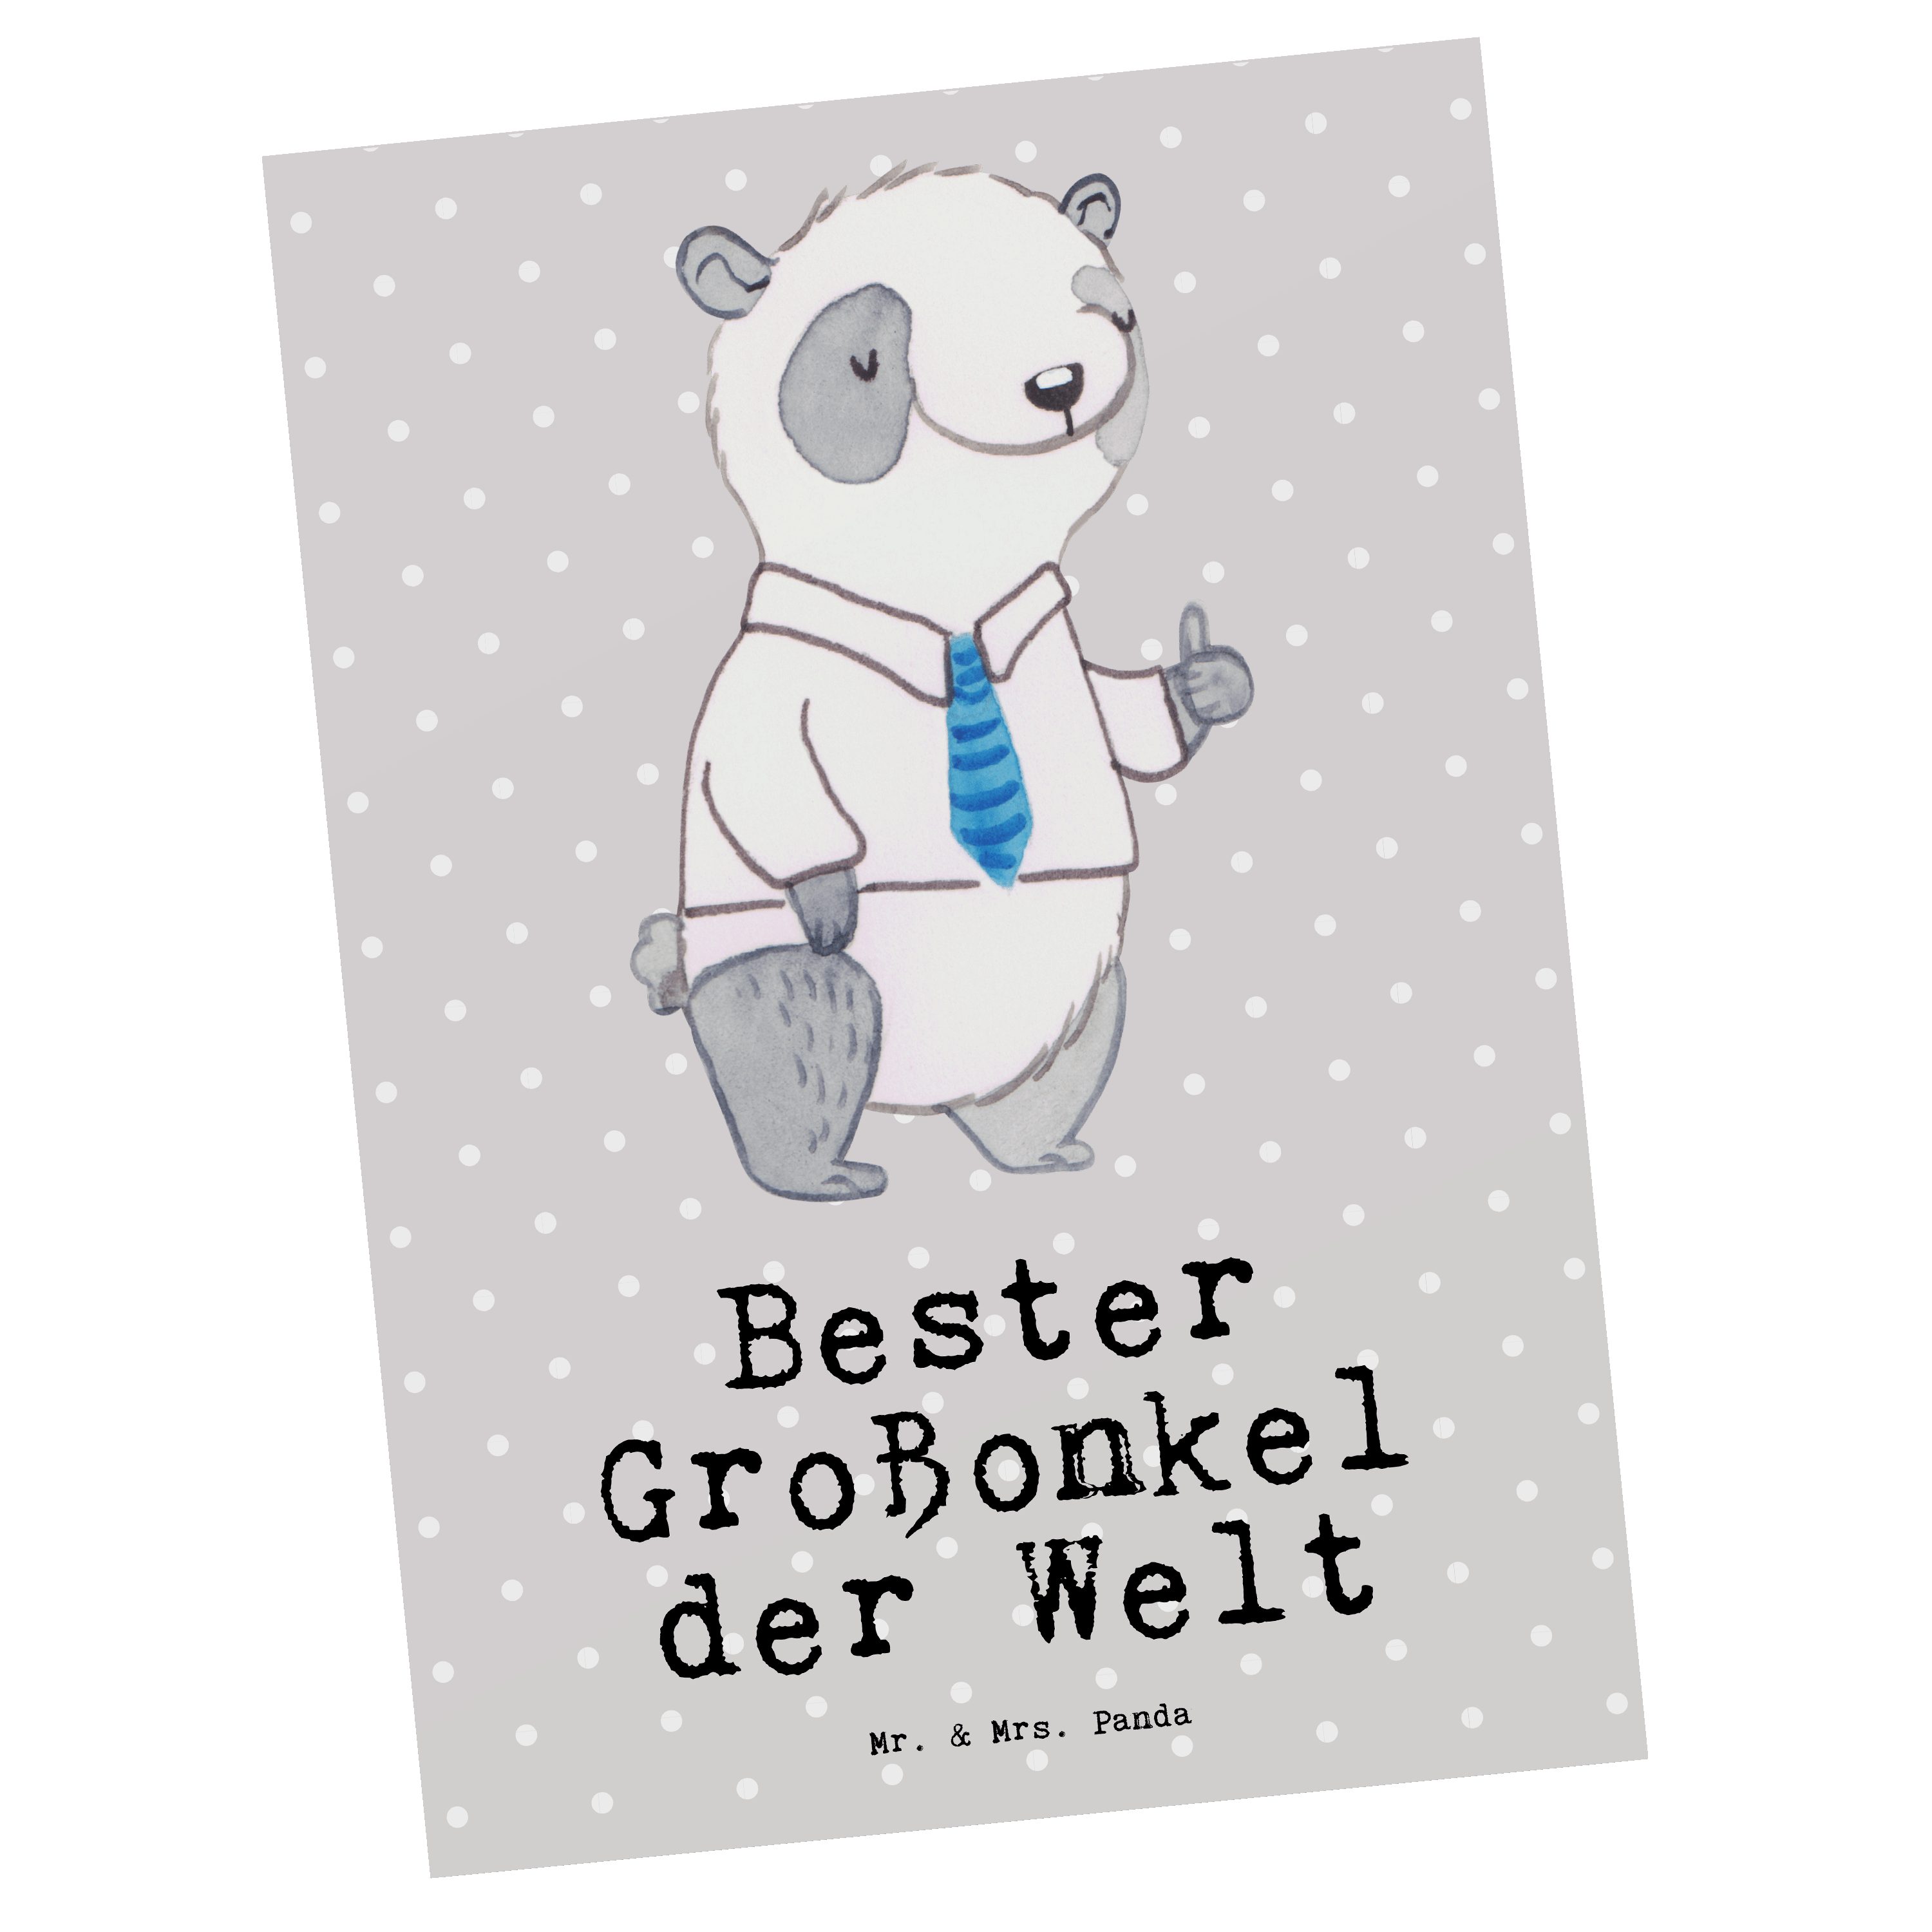 Mr. & Mrs. Panda Panda Grau Postkarte Einladungs Großonkel Bester Pastell Welt - Geschenk, der 